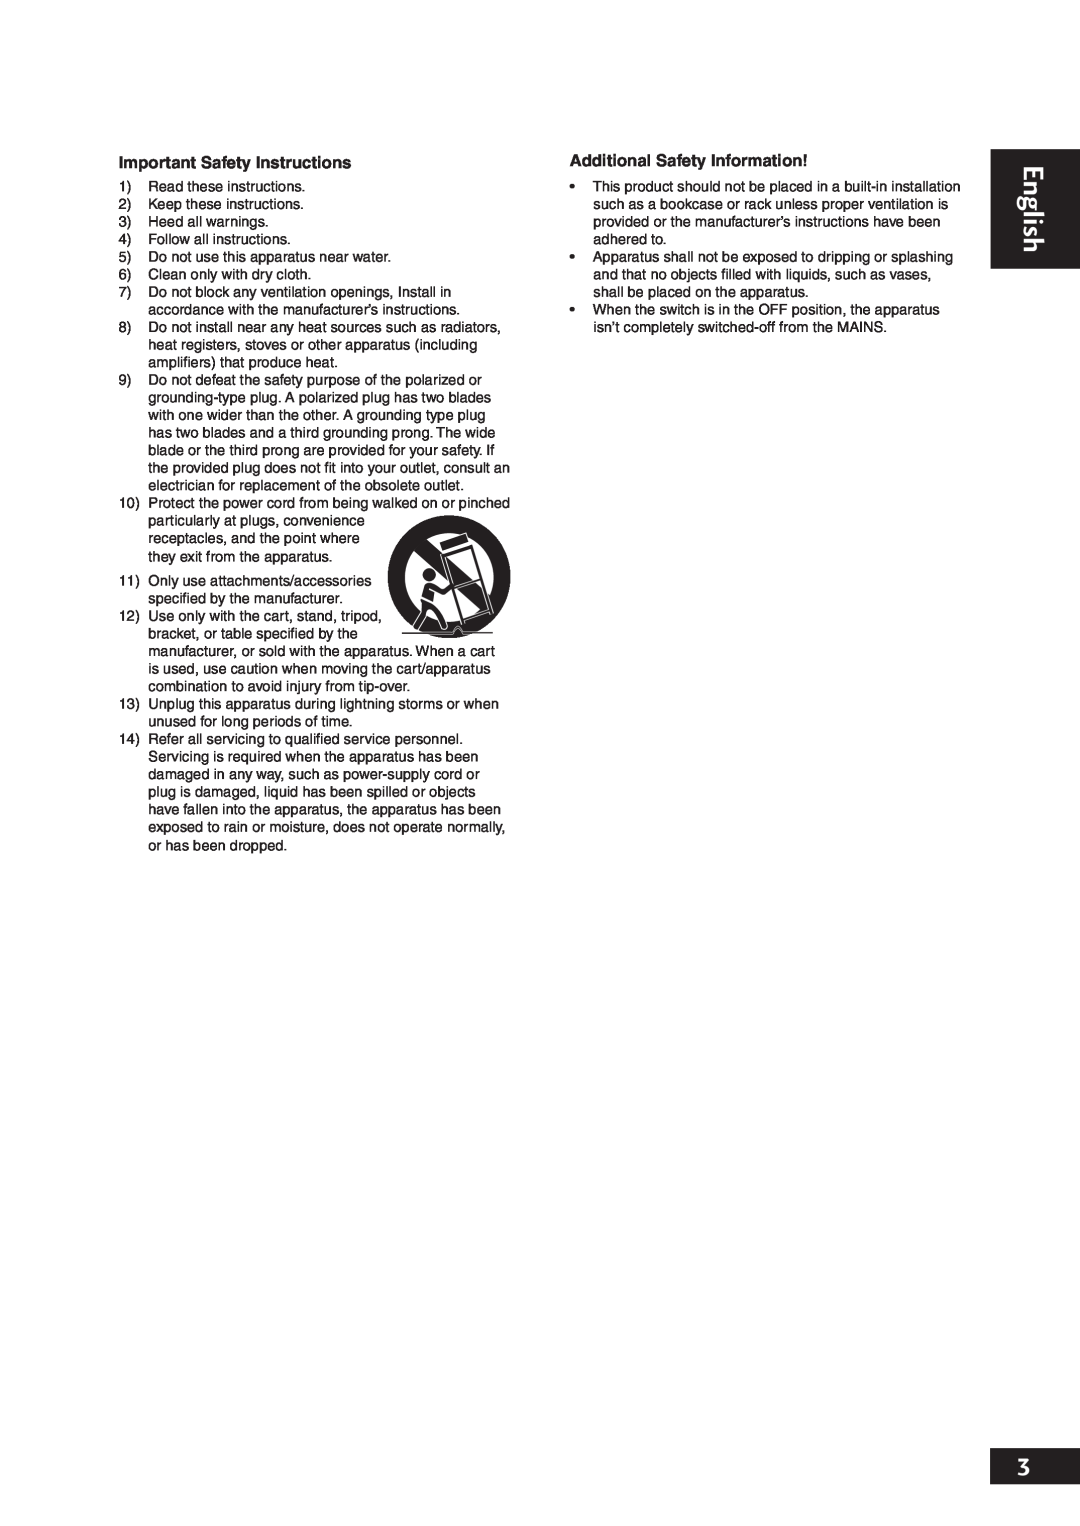 Marantz DV7001 manual English, Important Safety Instructions, Additional Safety Information 